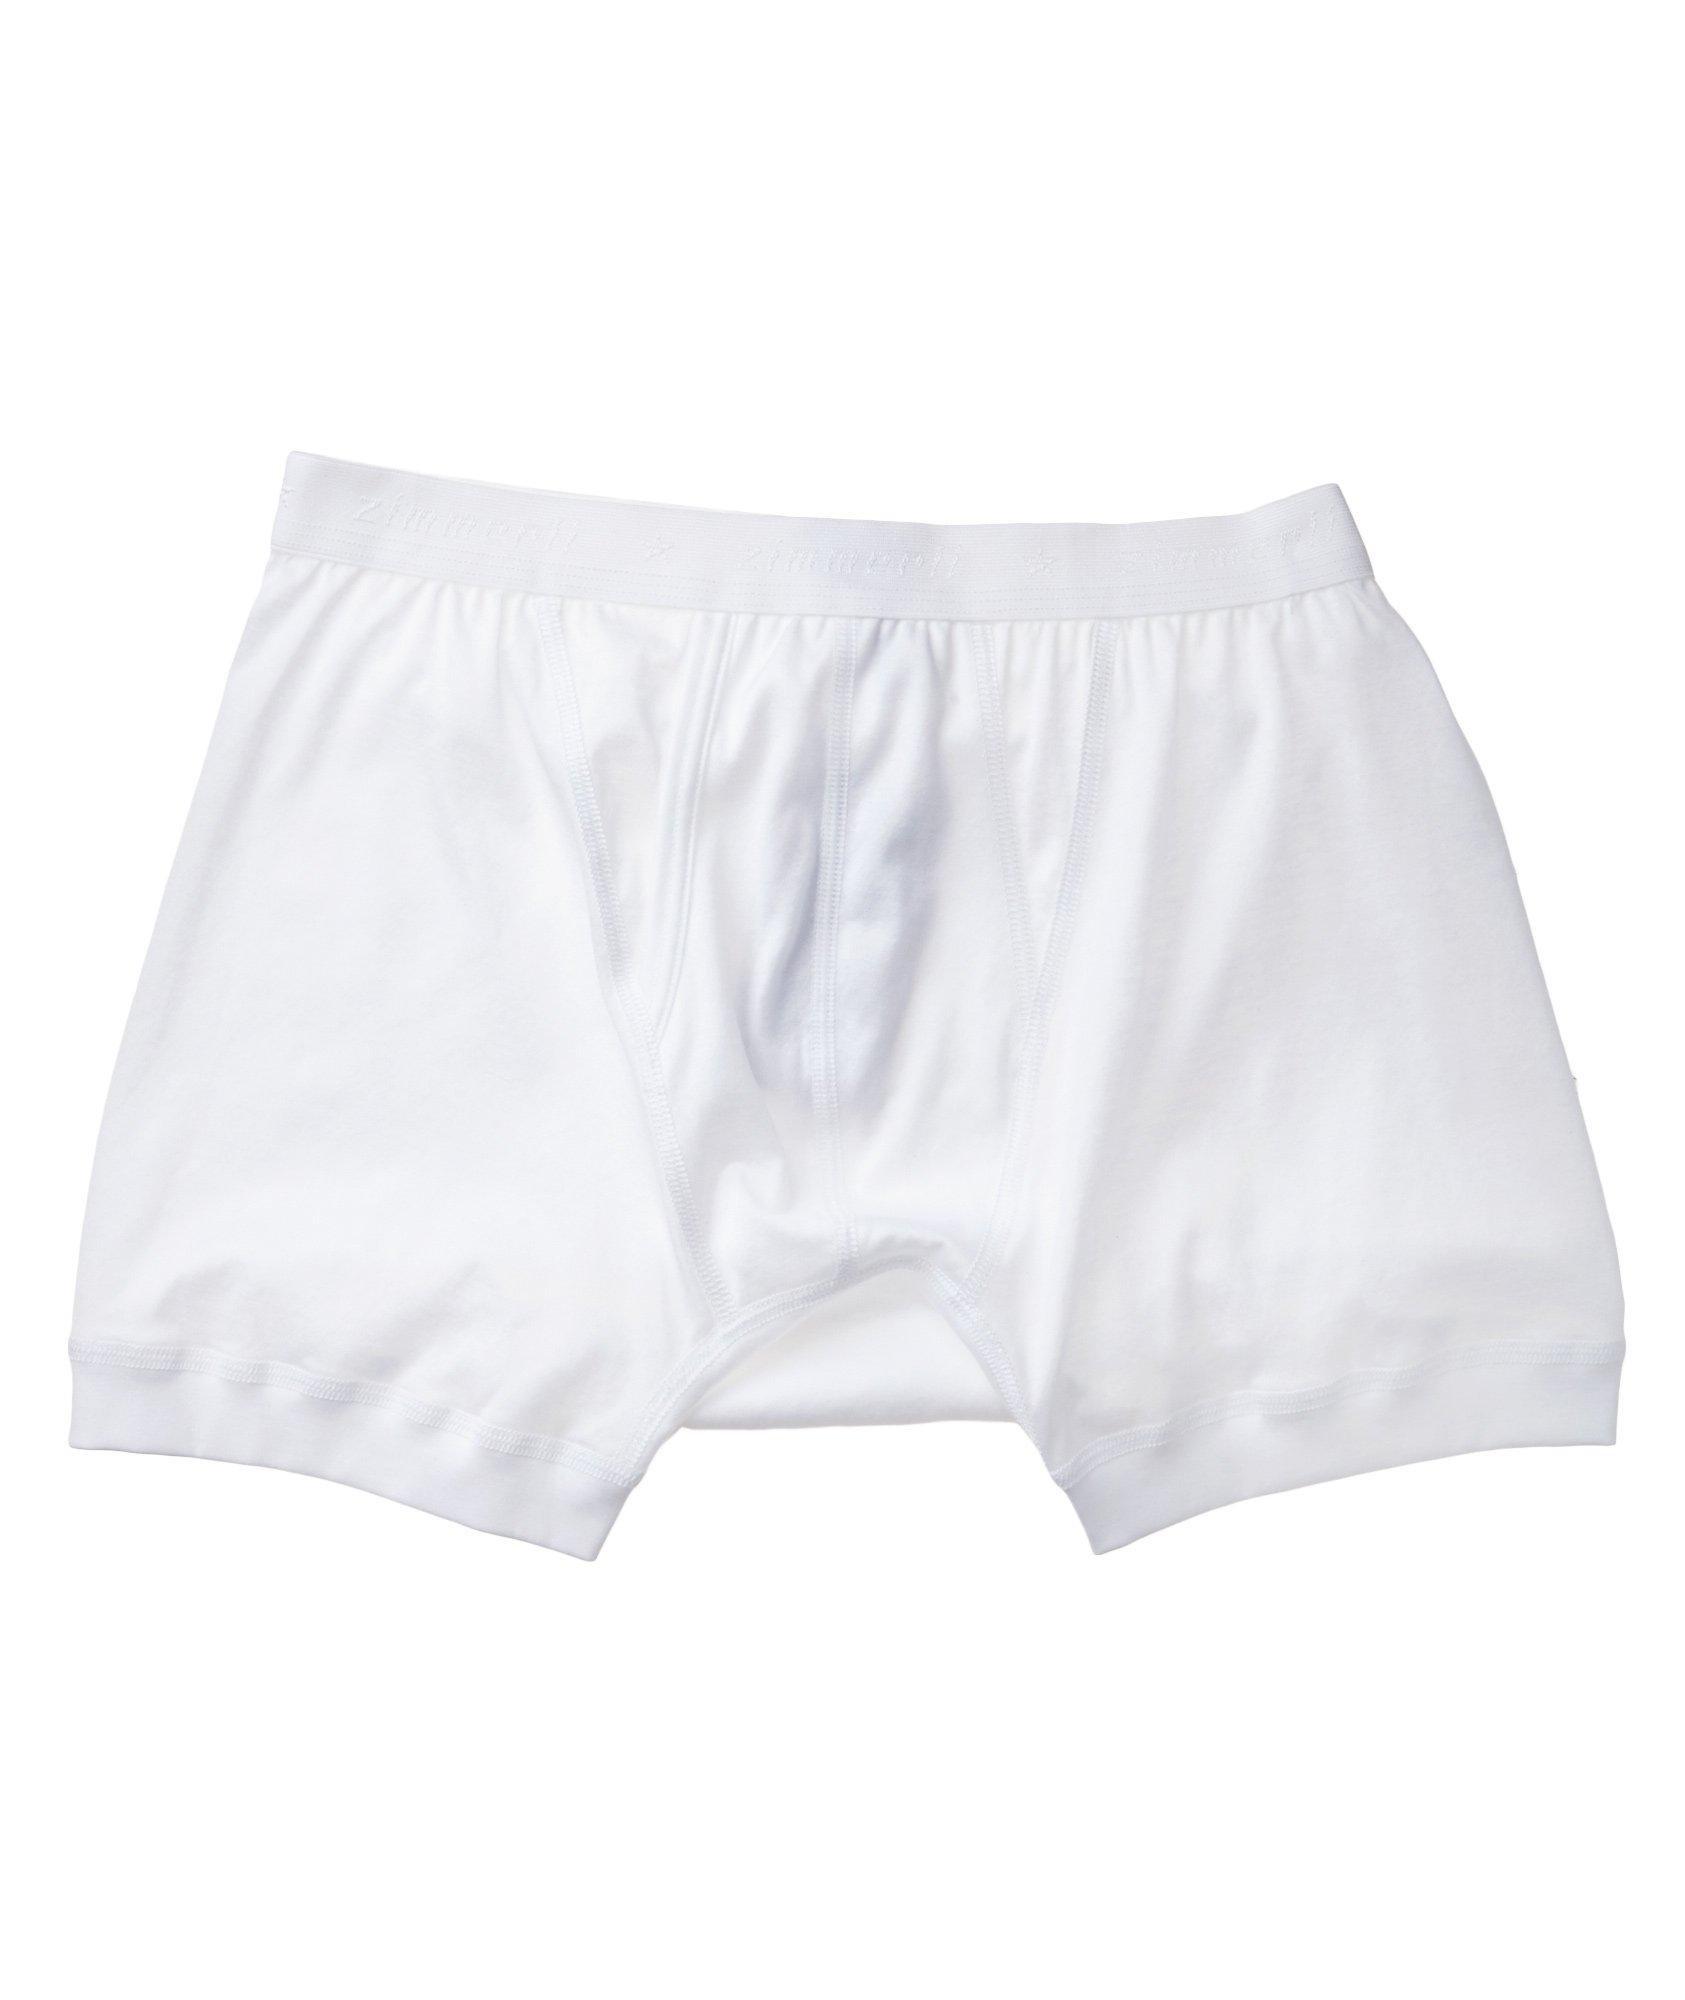 Zimmerli 252 Royal Classic Cotton Boxers | Underwear | Harry Rosen